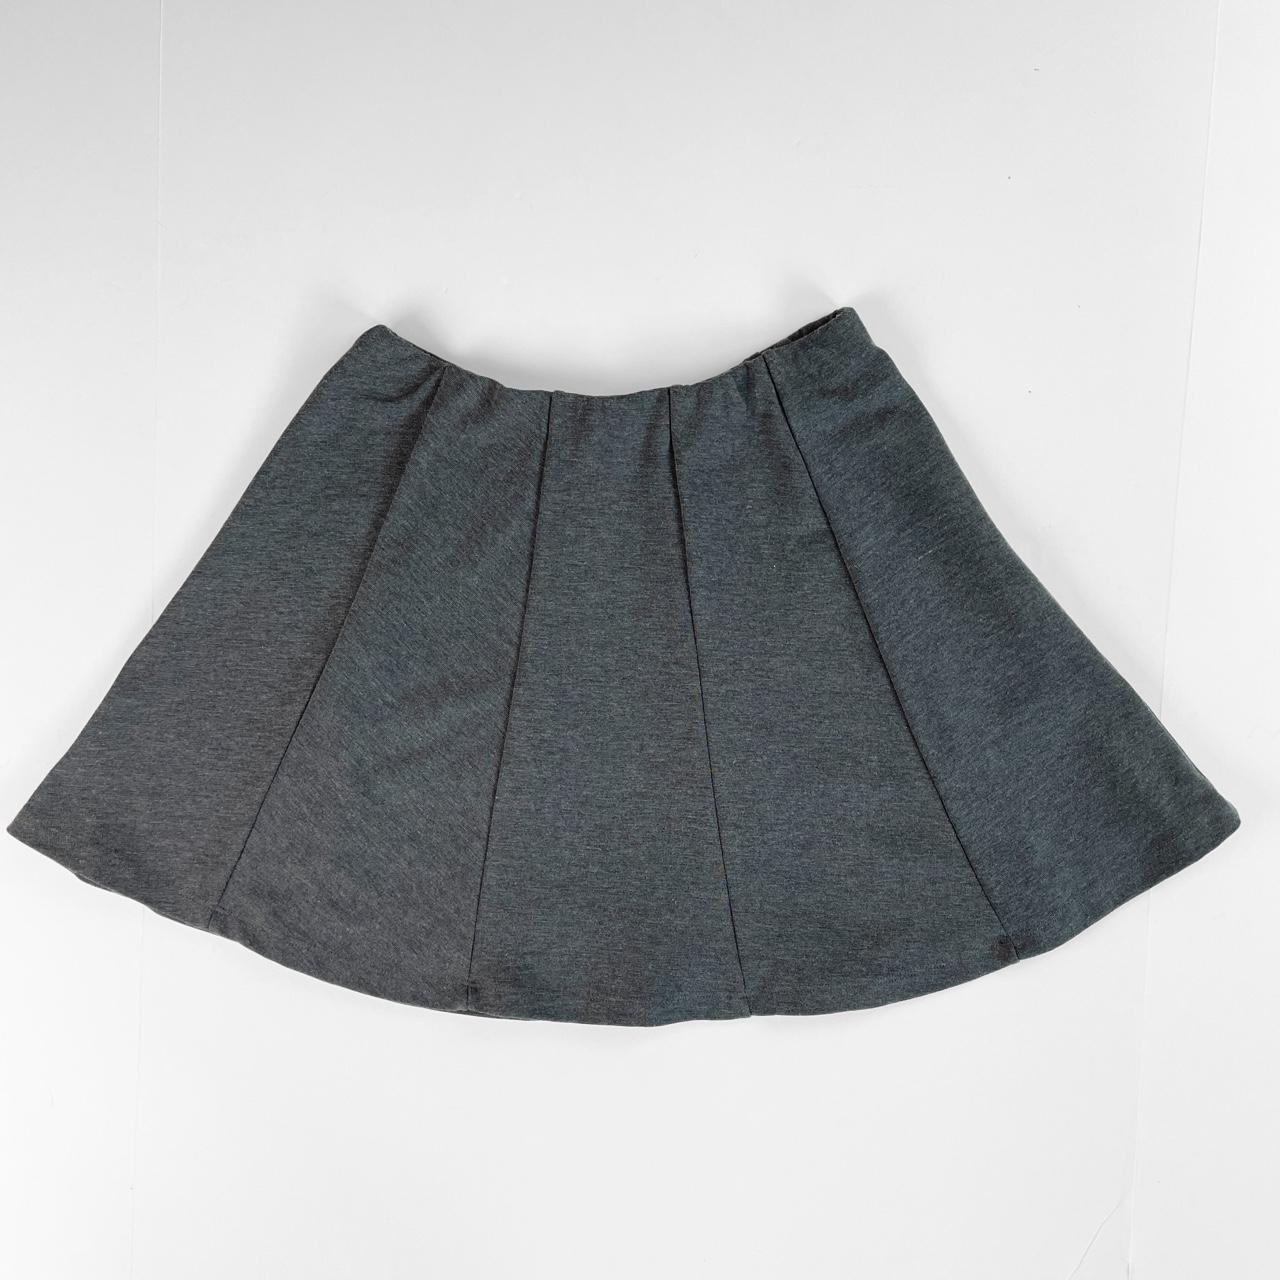 Product Image 1 - Pleated Mini Skirt

Cutest little grey